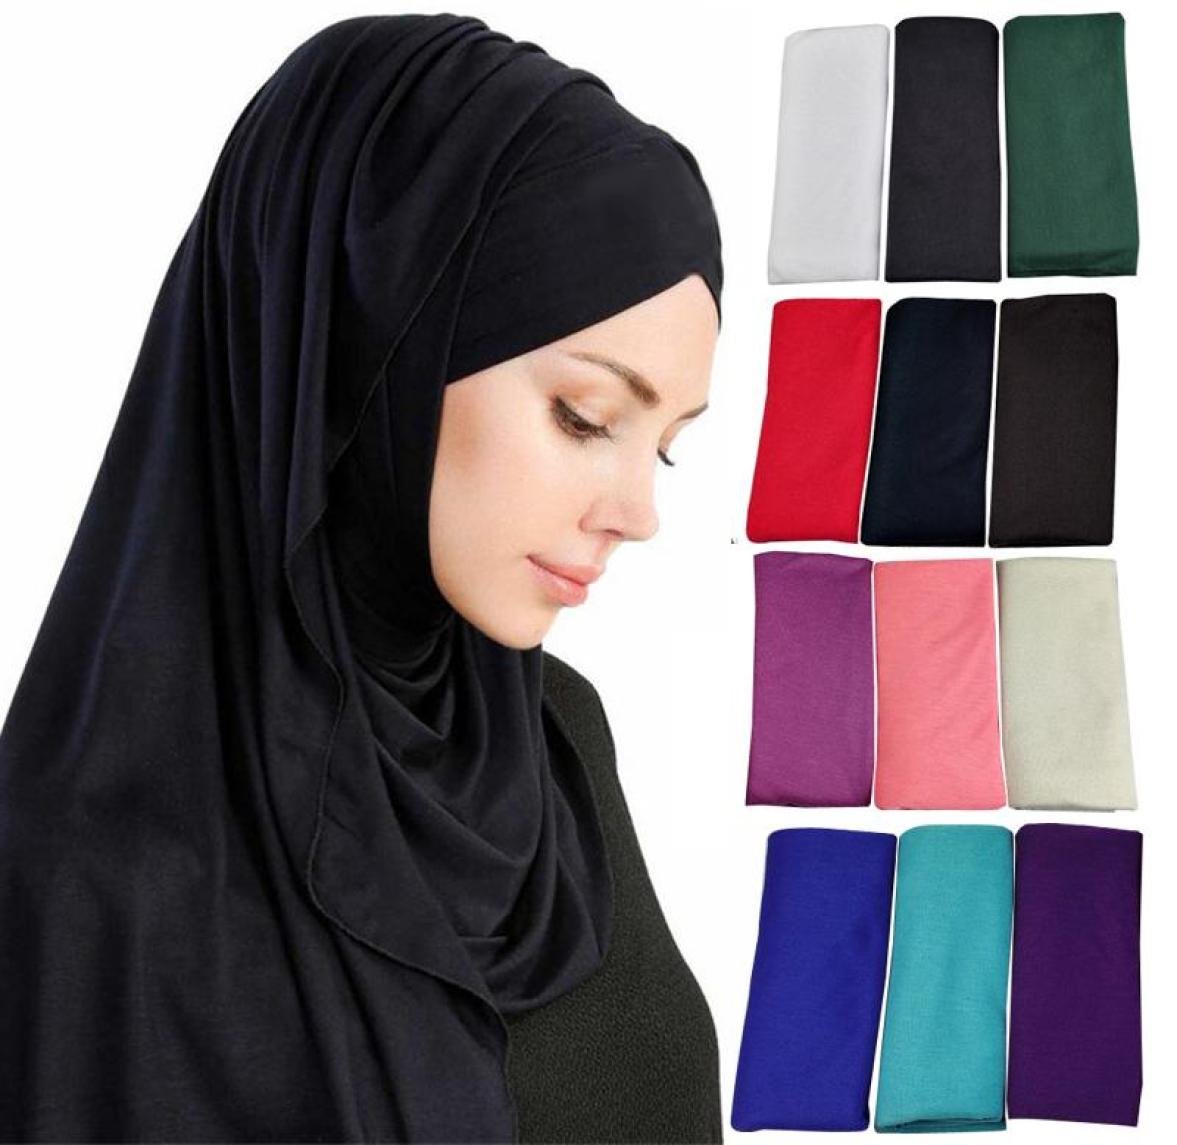 

Scarves Fashion Women Solid Color Cotton Headscarf Ready To Wear Instant Hijab Scarf Muslim Shawl Islamic Hijabs Arab Wrap Head6498575